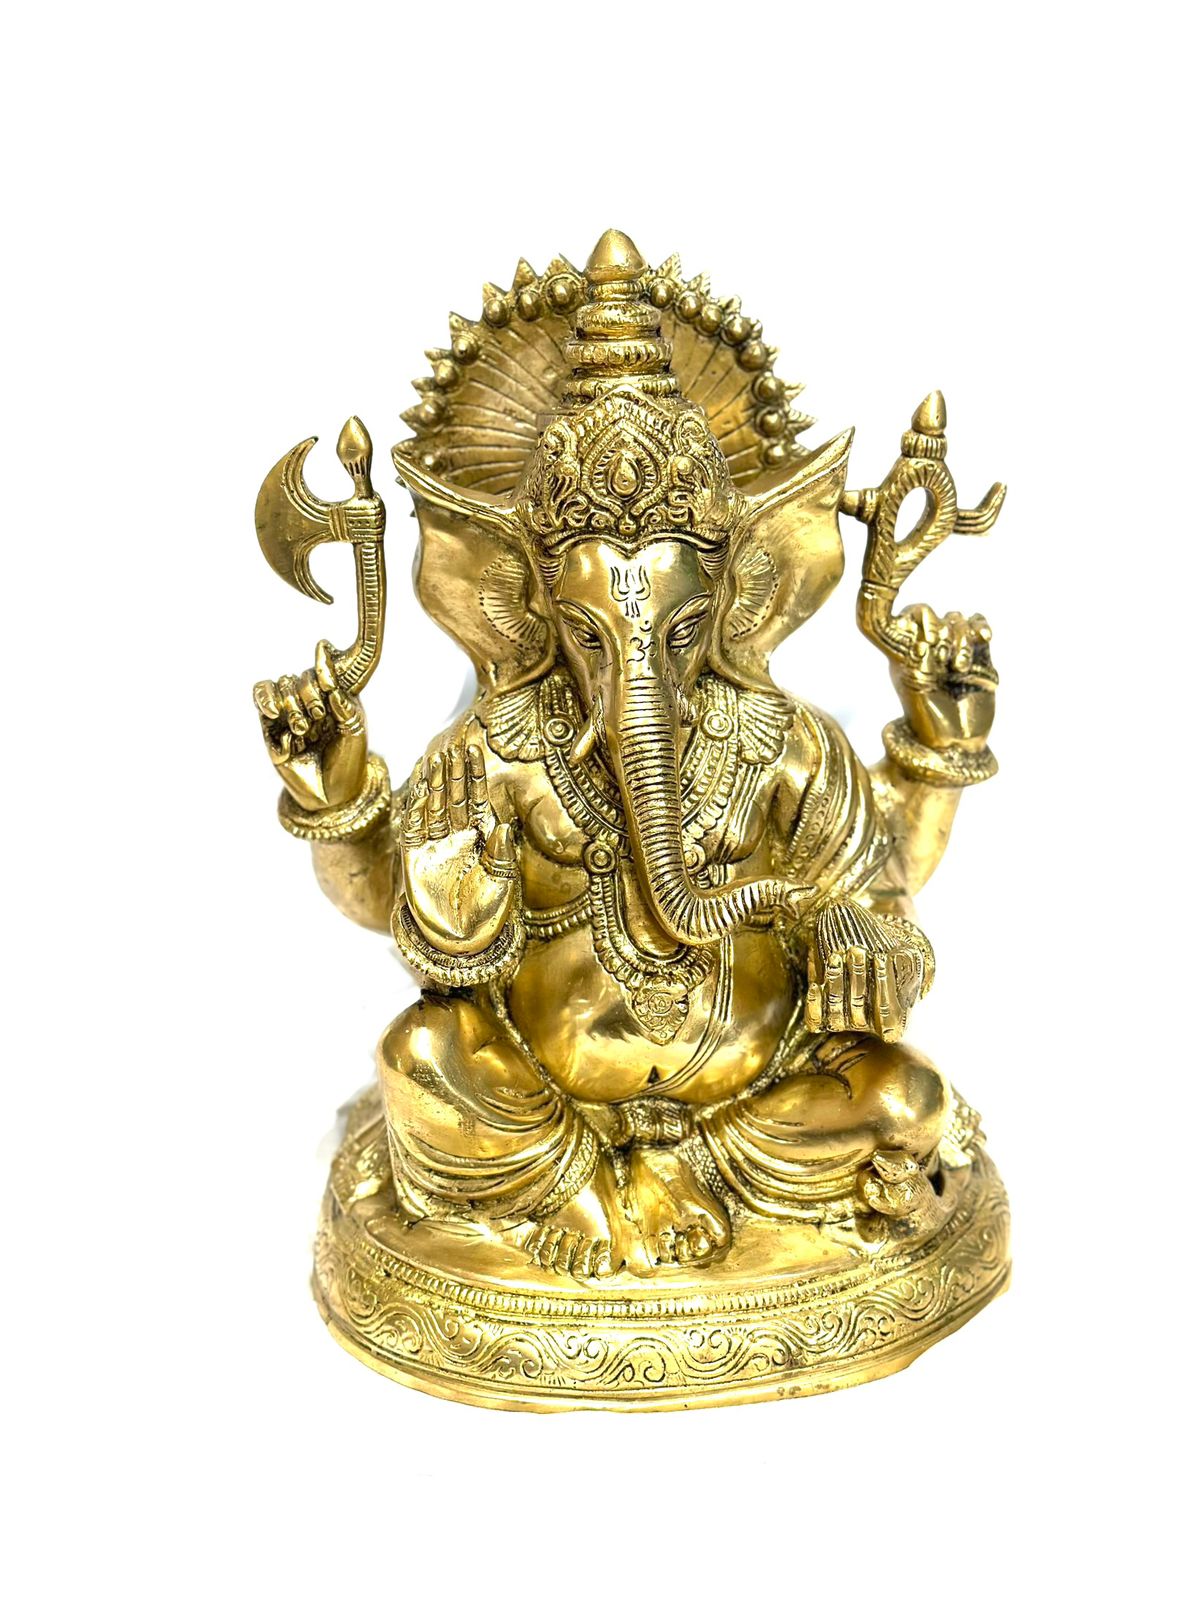 God Ganesha Brass Creations Ganpati Décor For Shop Home Entrance By Tamrapatra